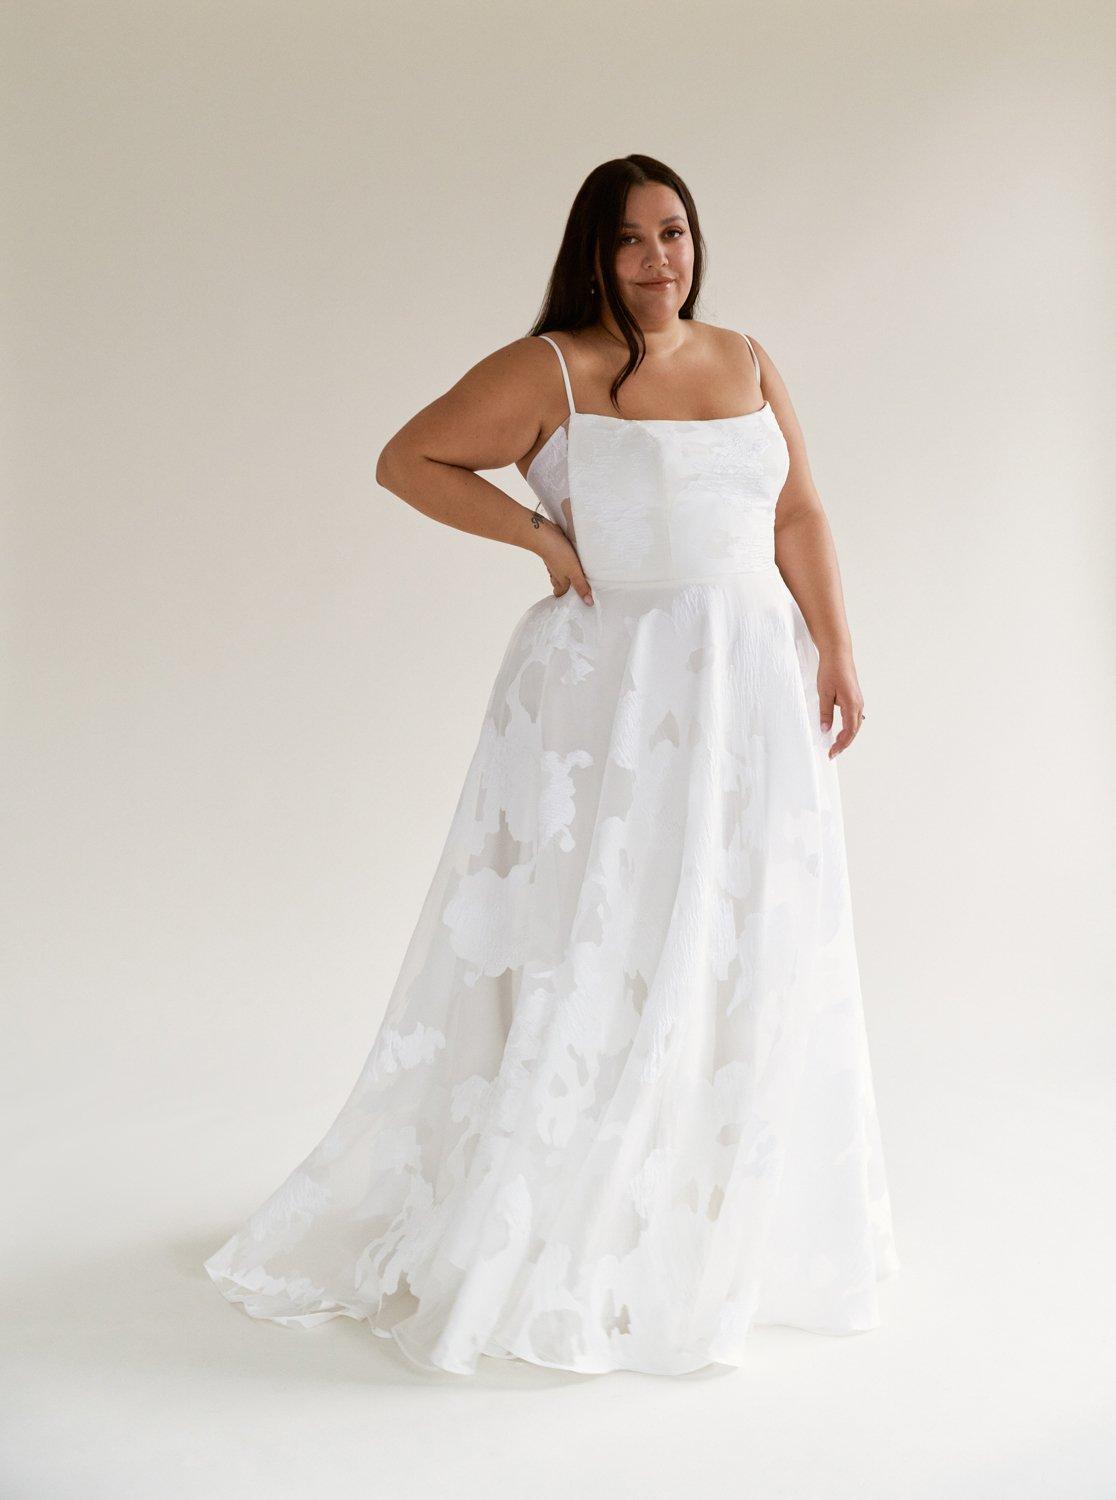 15 Plus size wedding dresses UK - Best Editor picks for 2022